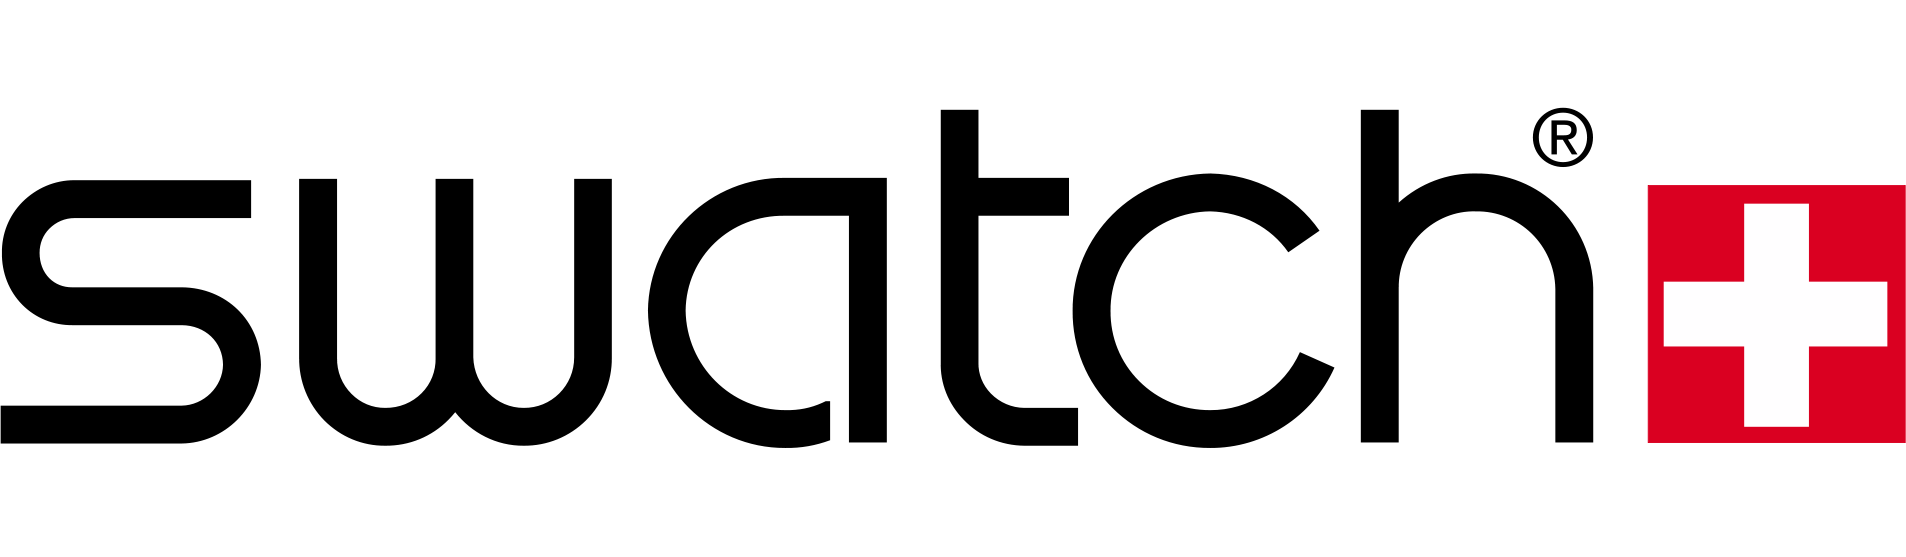 logo Swatch